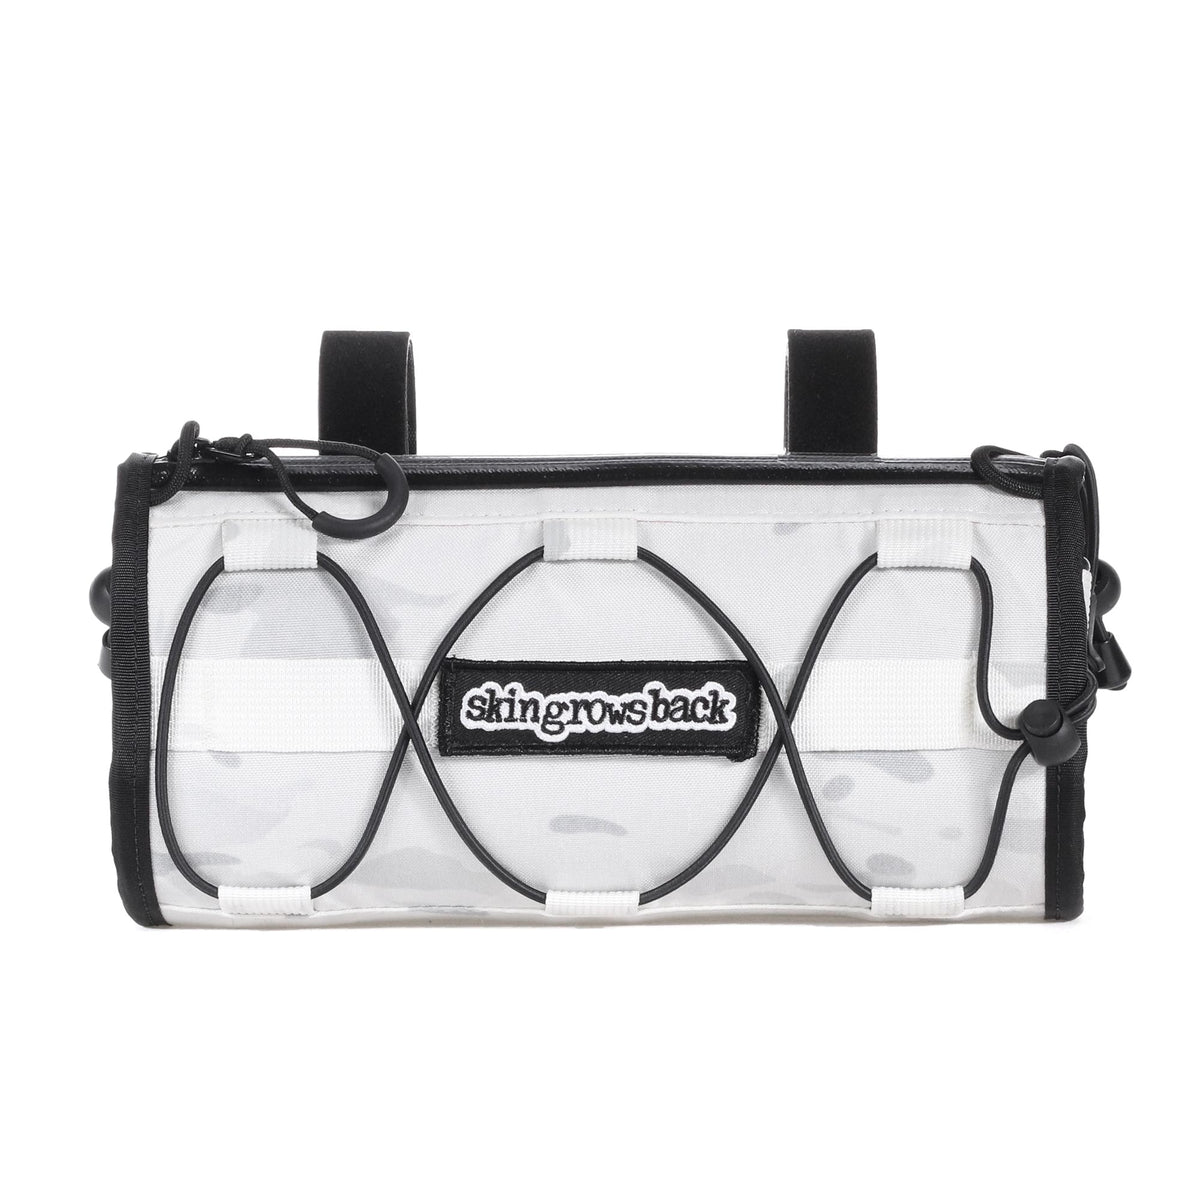 skingrowsback lunch box handlebar bag cycling gravel bike made in australia multicam alpine